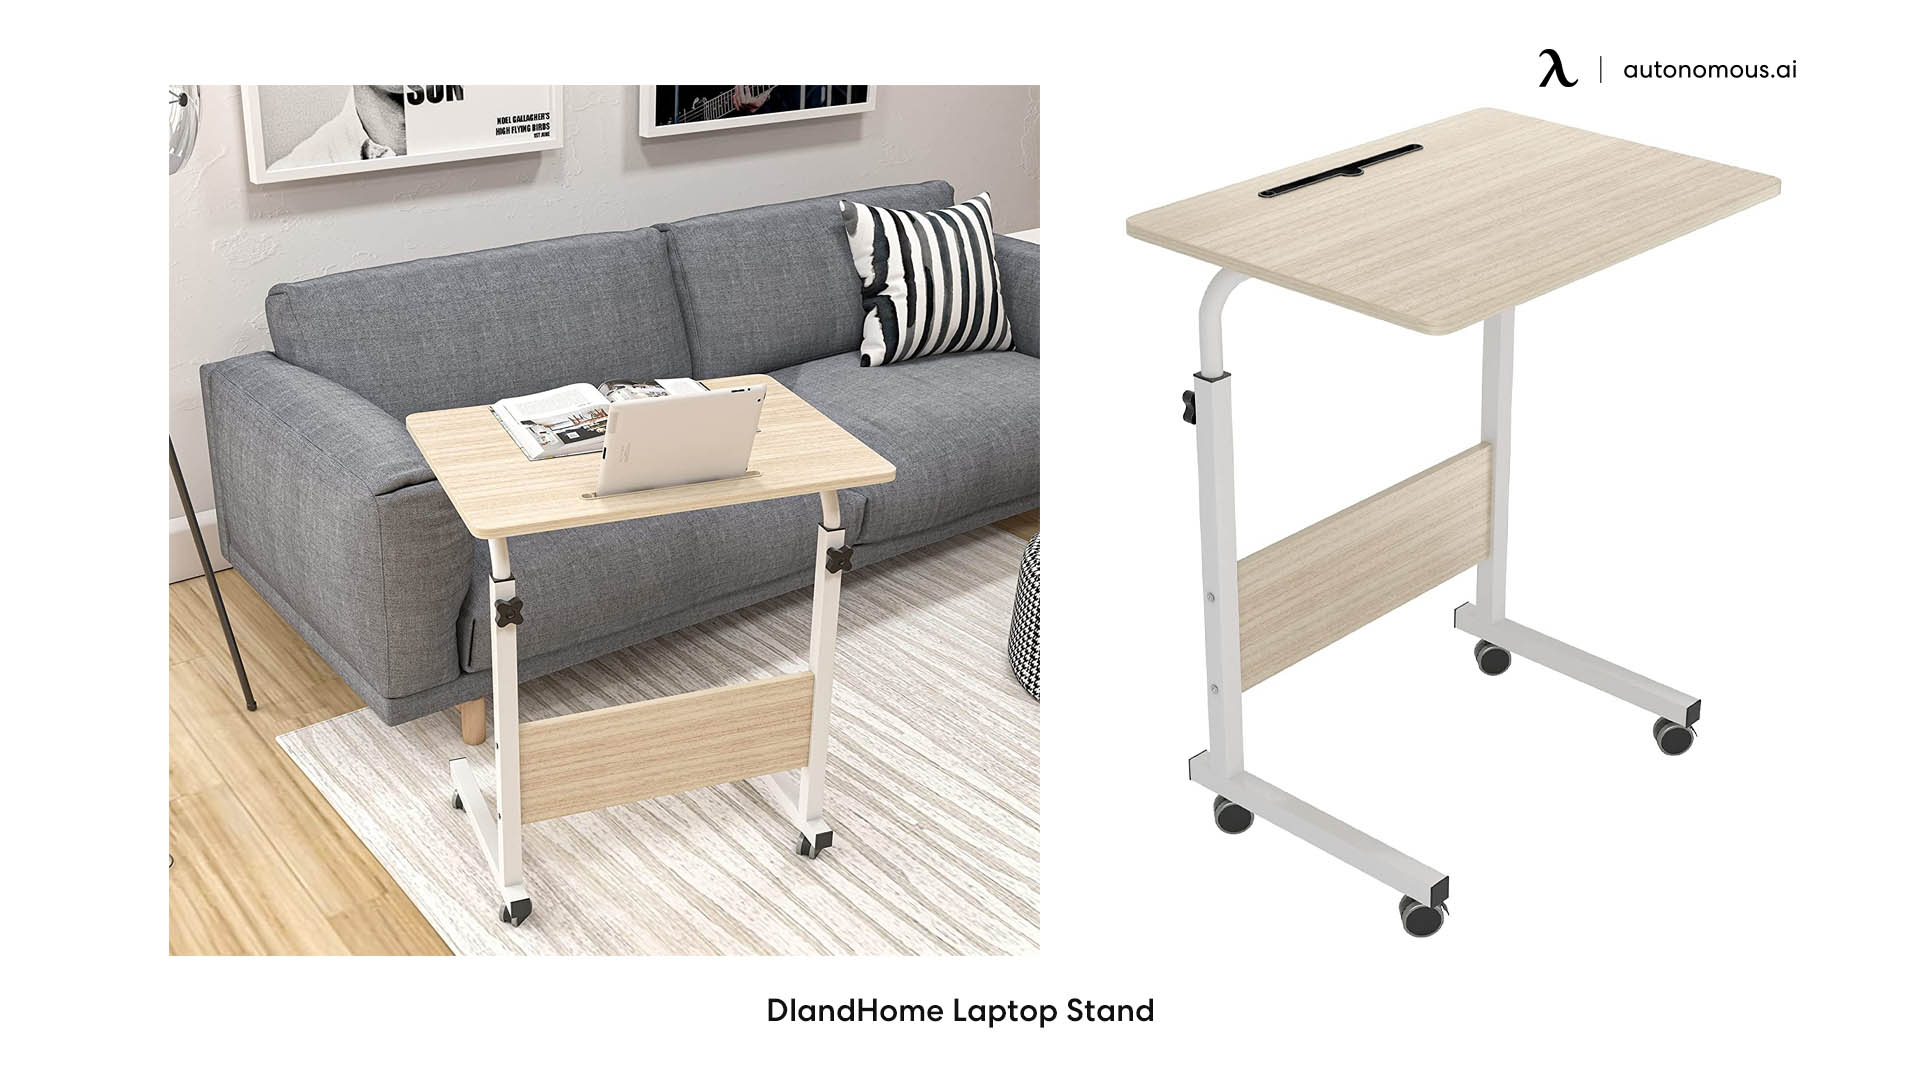 DlandHome Laptop Stand portable standing desk